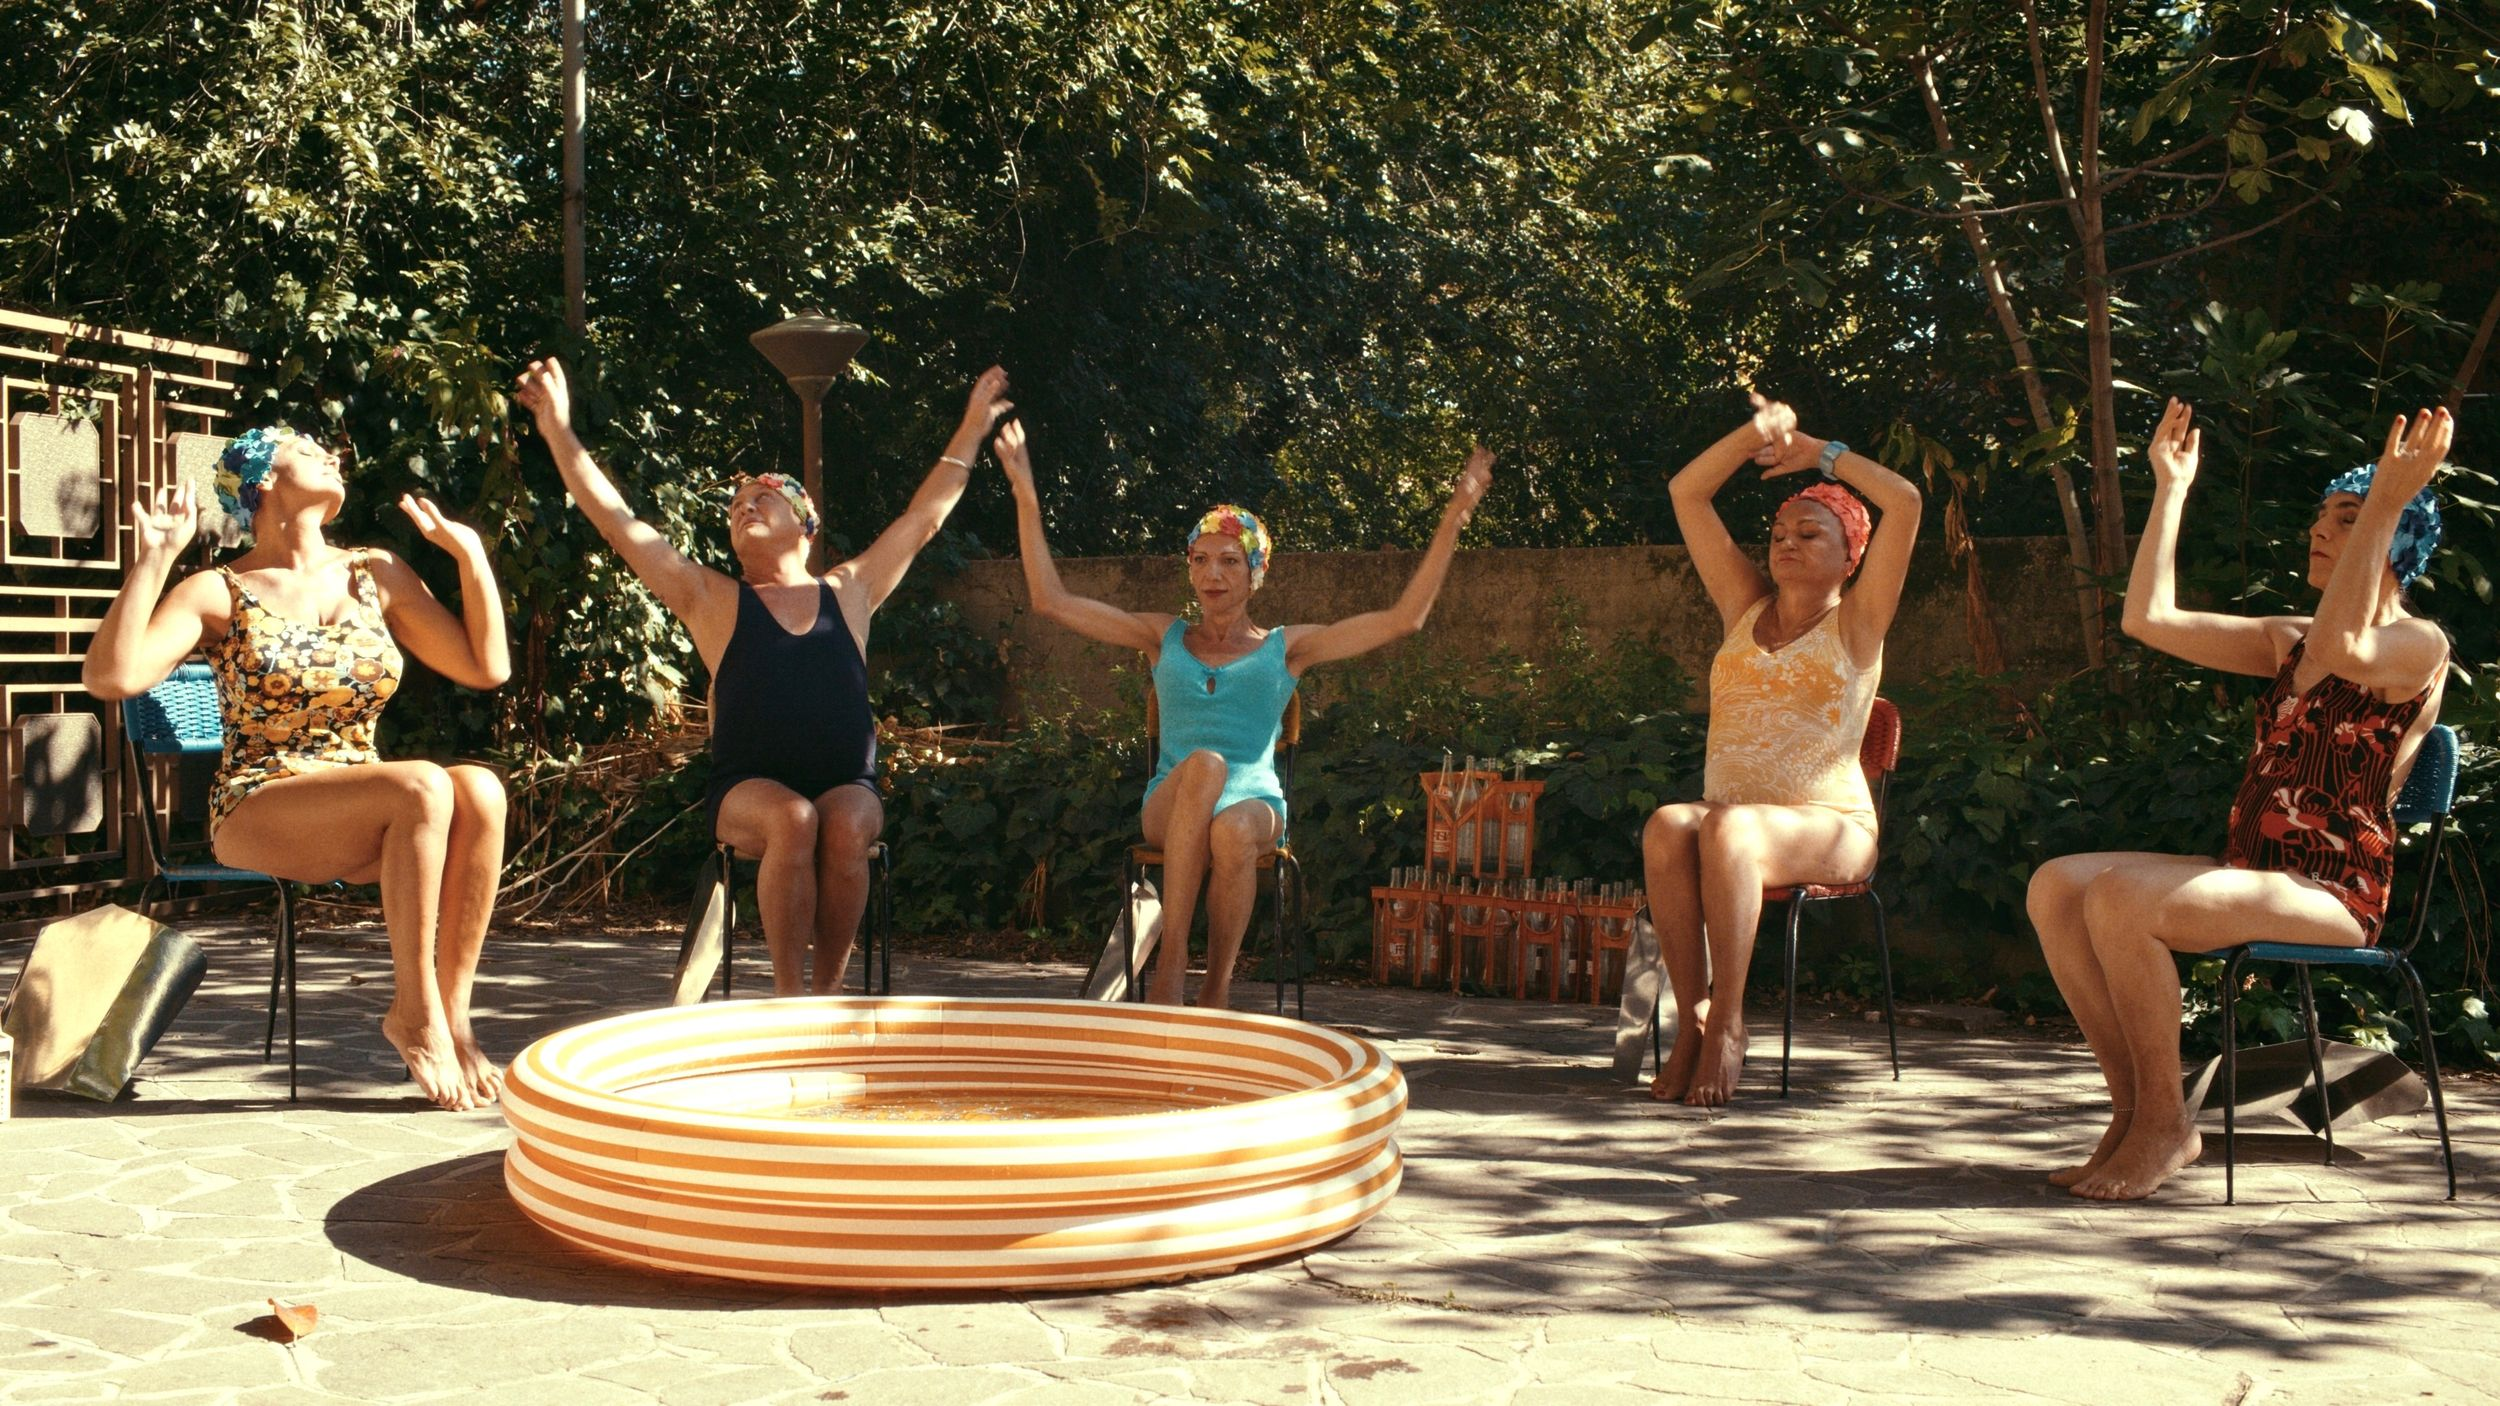 Trans women sit joyfully around an outdoor kiddie pool